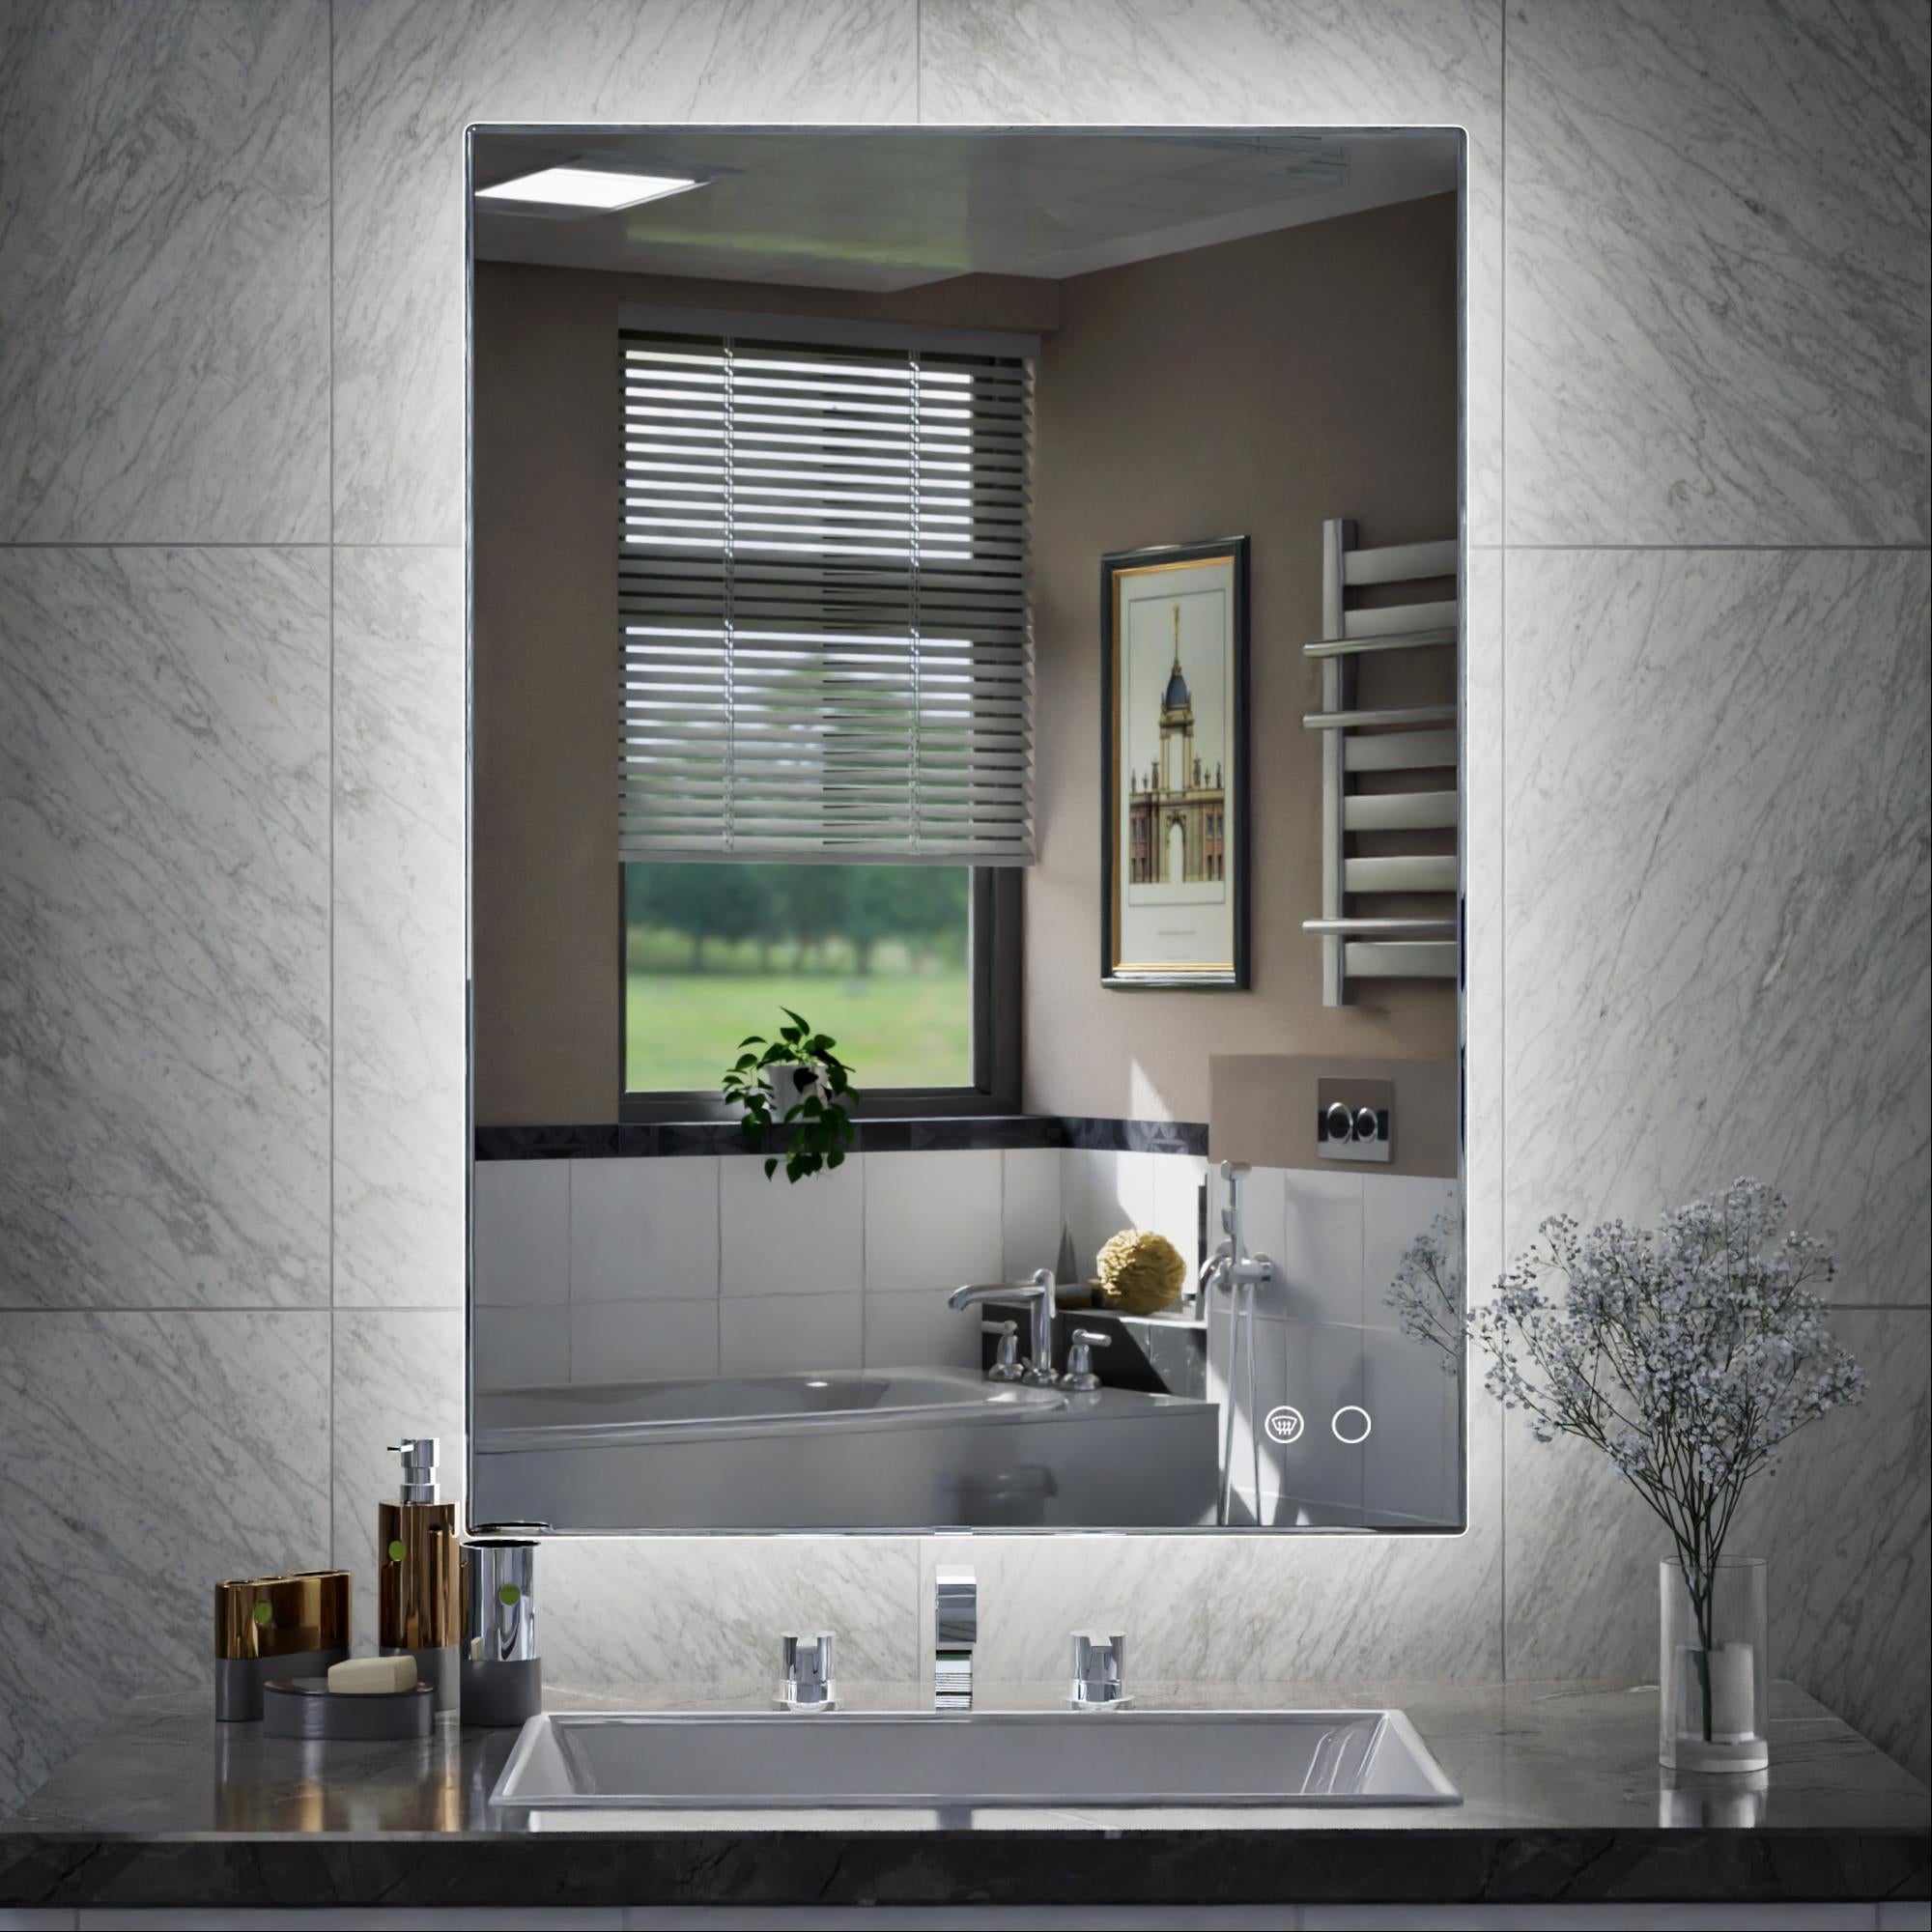 Keonjinn LED Vanity Mirror 20 x 28 inch Backlit Mirror Bathroom Mirror with Lights Wall Mounted Anti-Fog Lighted Bathroom Mirror Dimmable LED Makeup